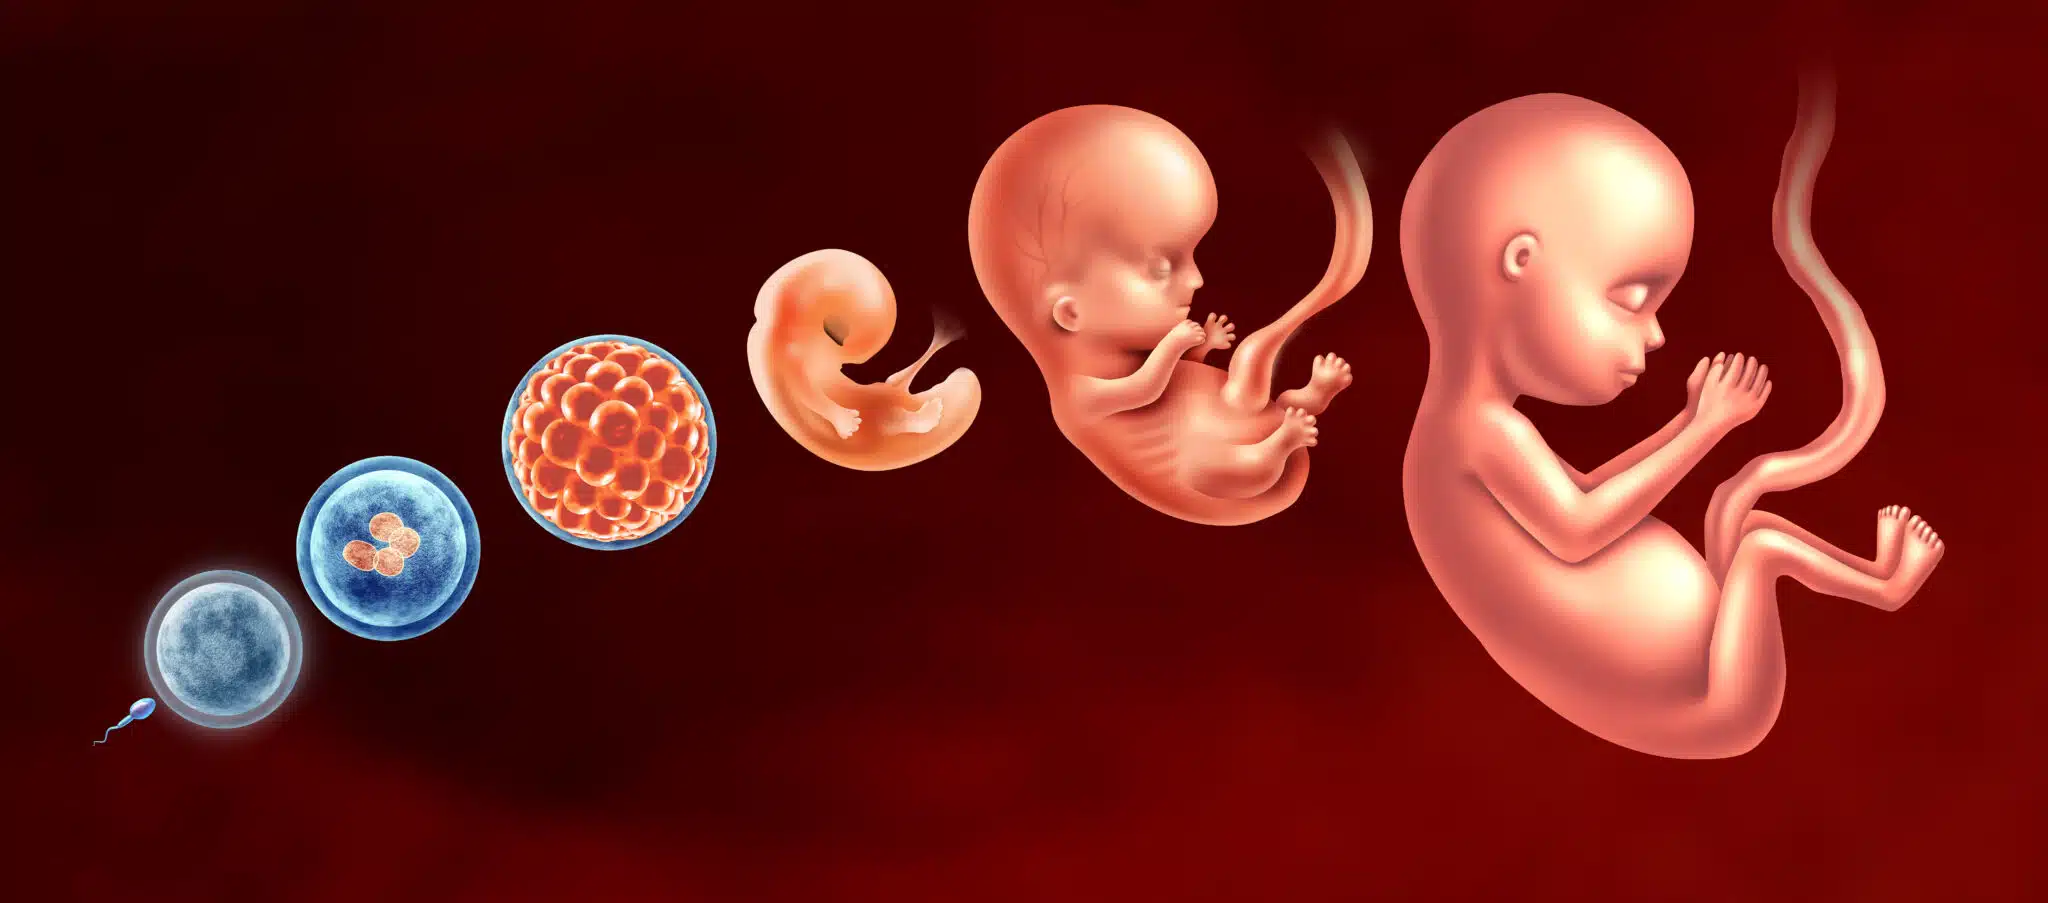 embryo development stages